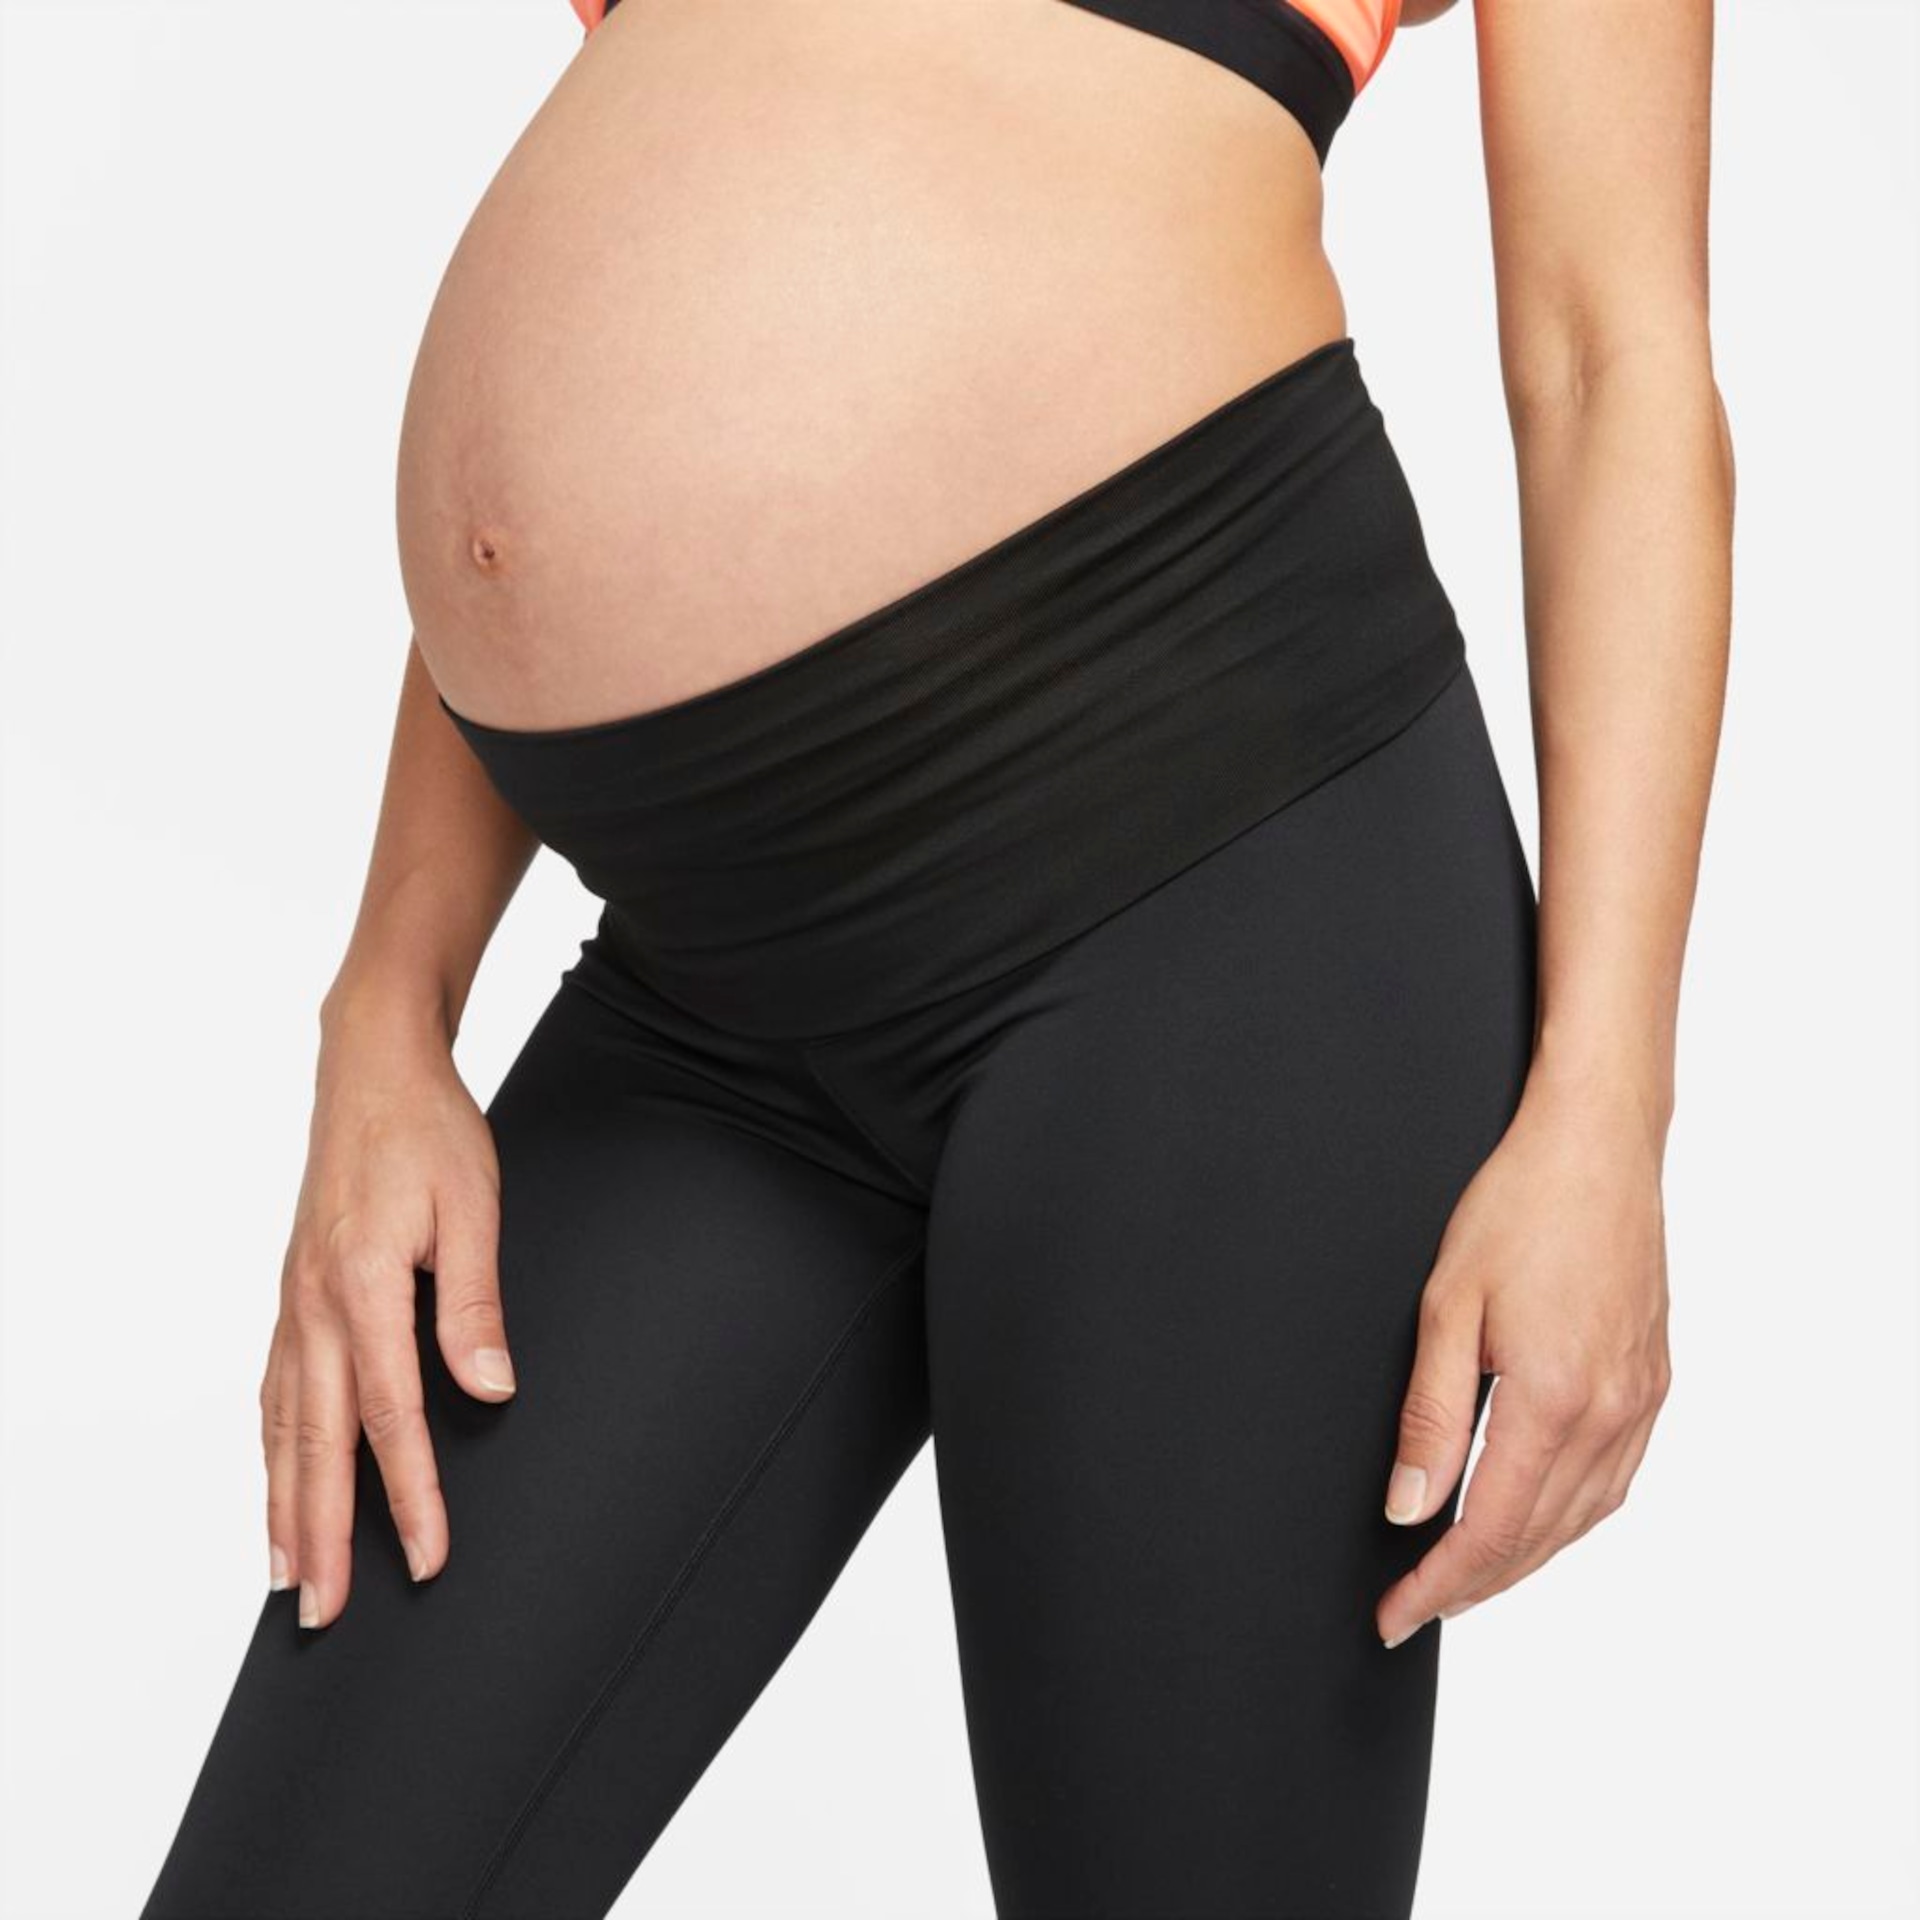 Legging Nike One Maternidade Feminina - Foto 3